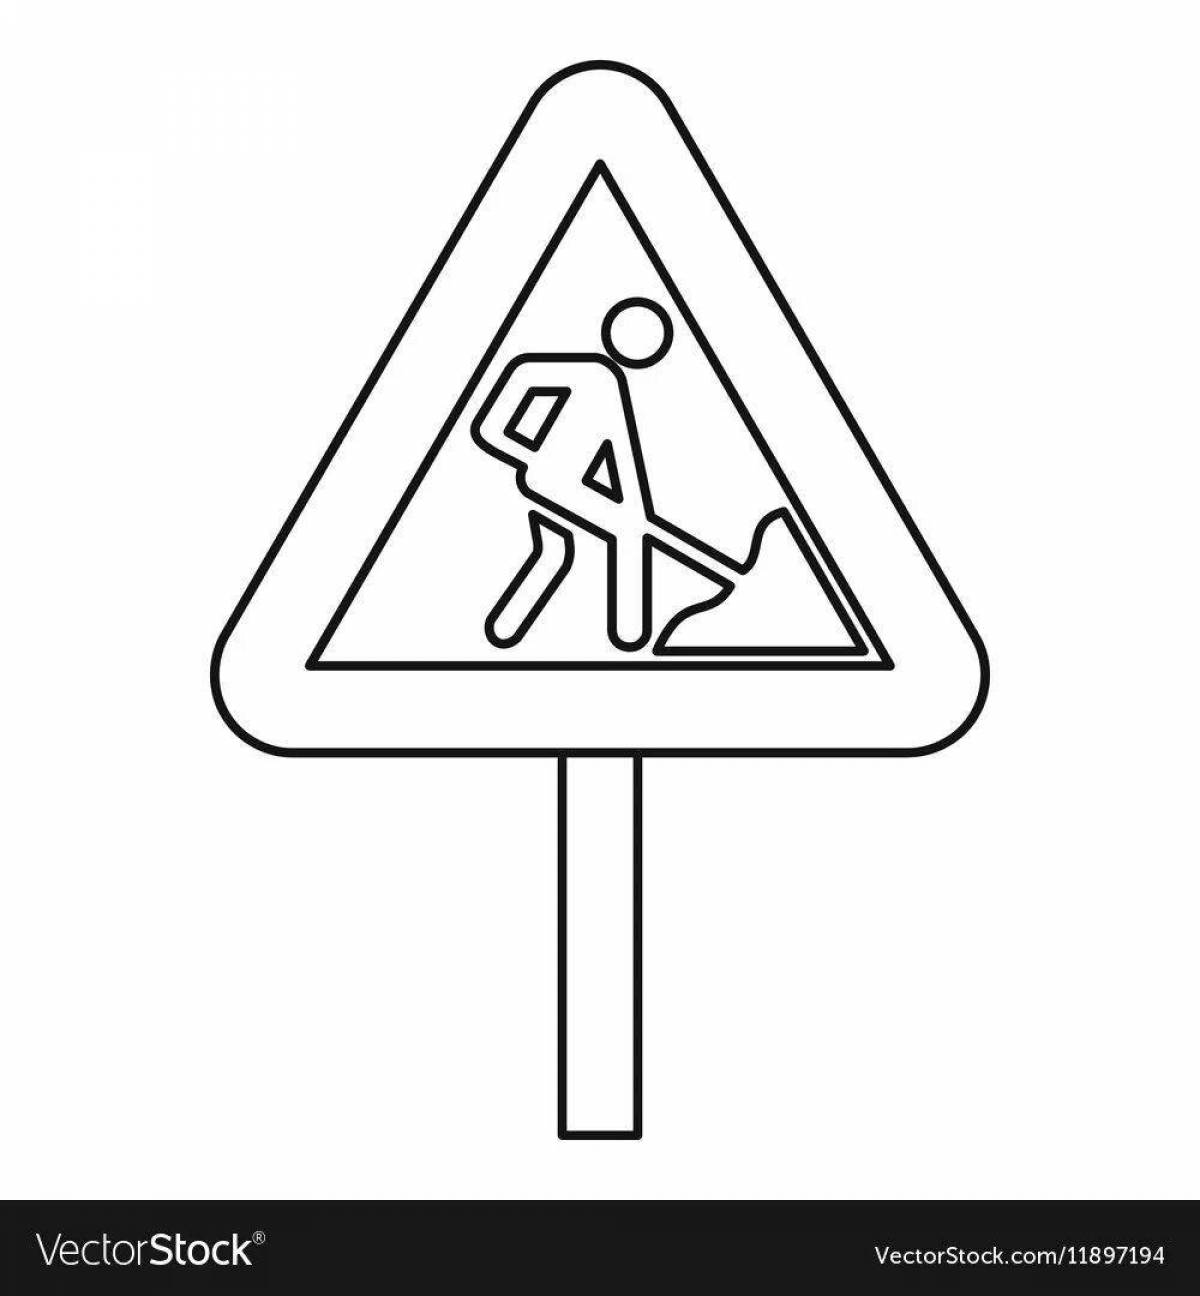 Warning traffic signs #1